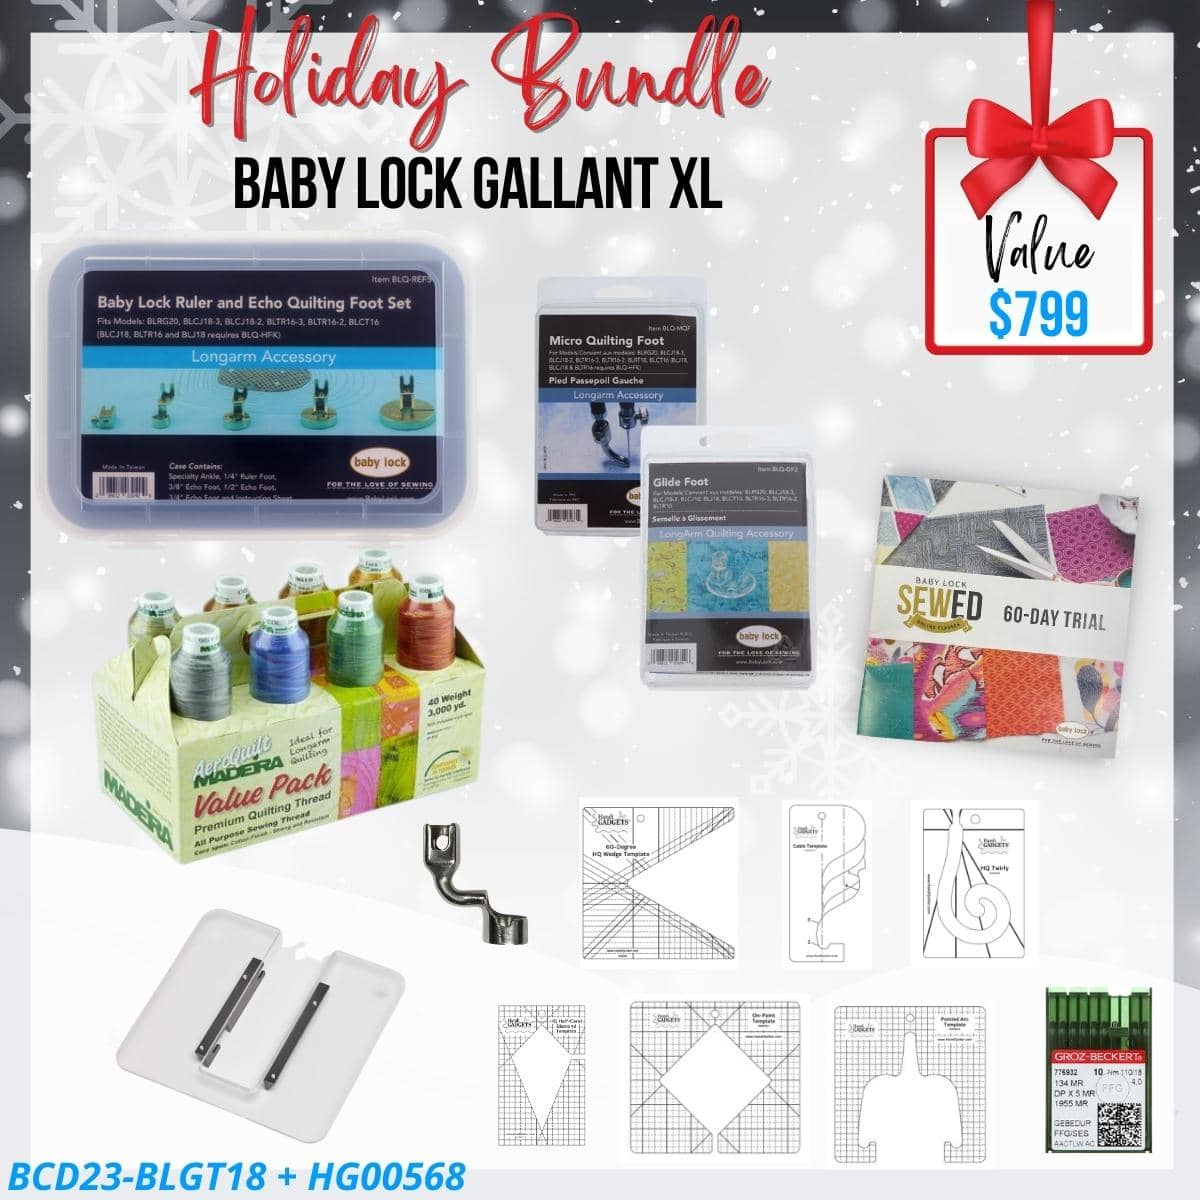 Baby Lock Gallant XL Bundle for holiday sale